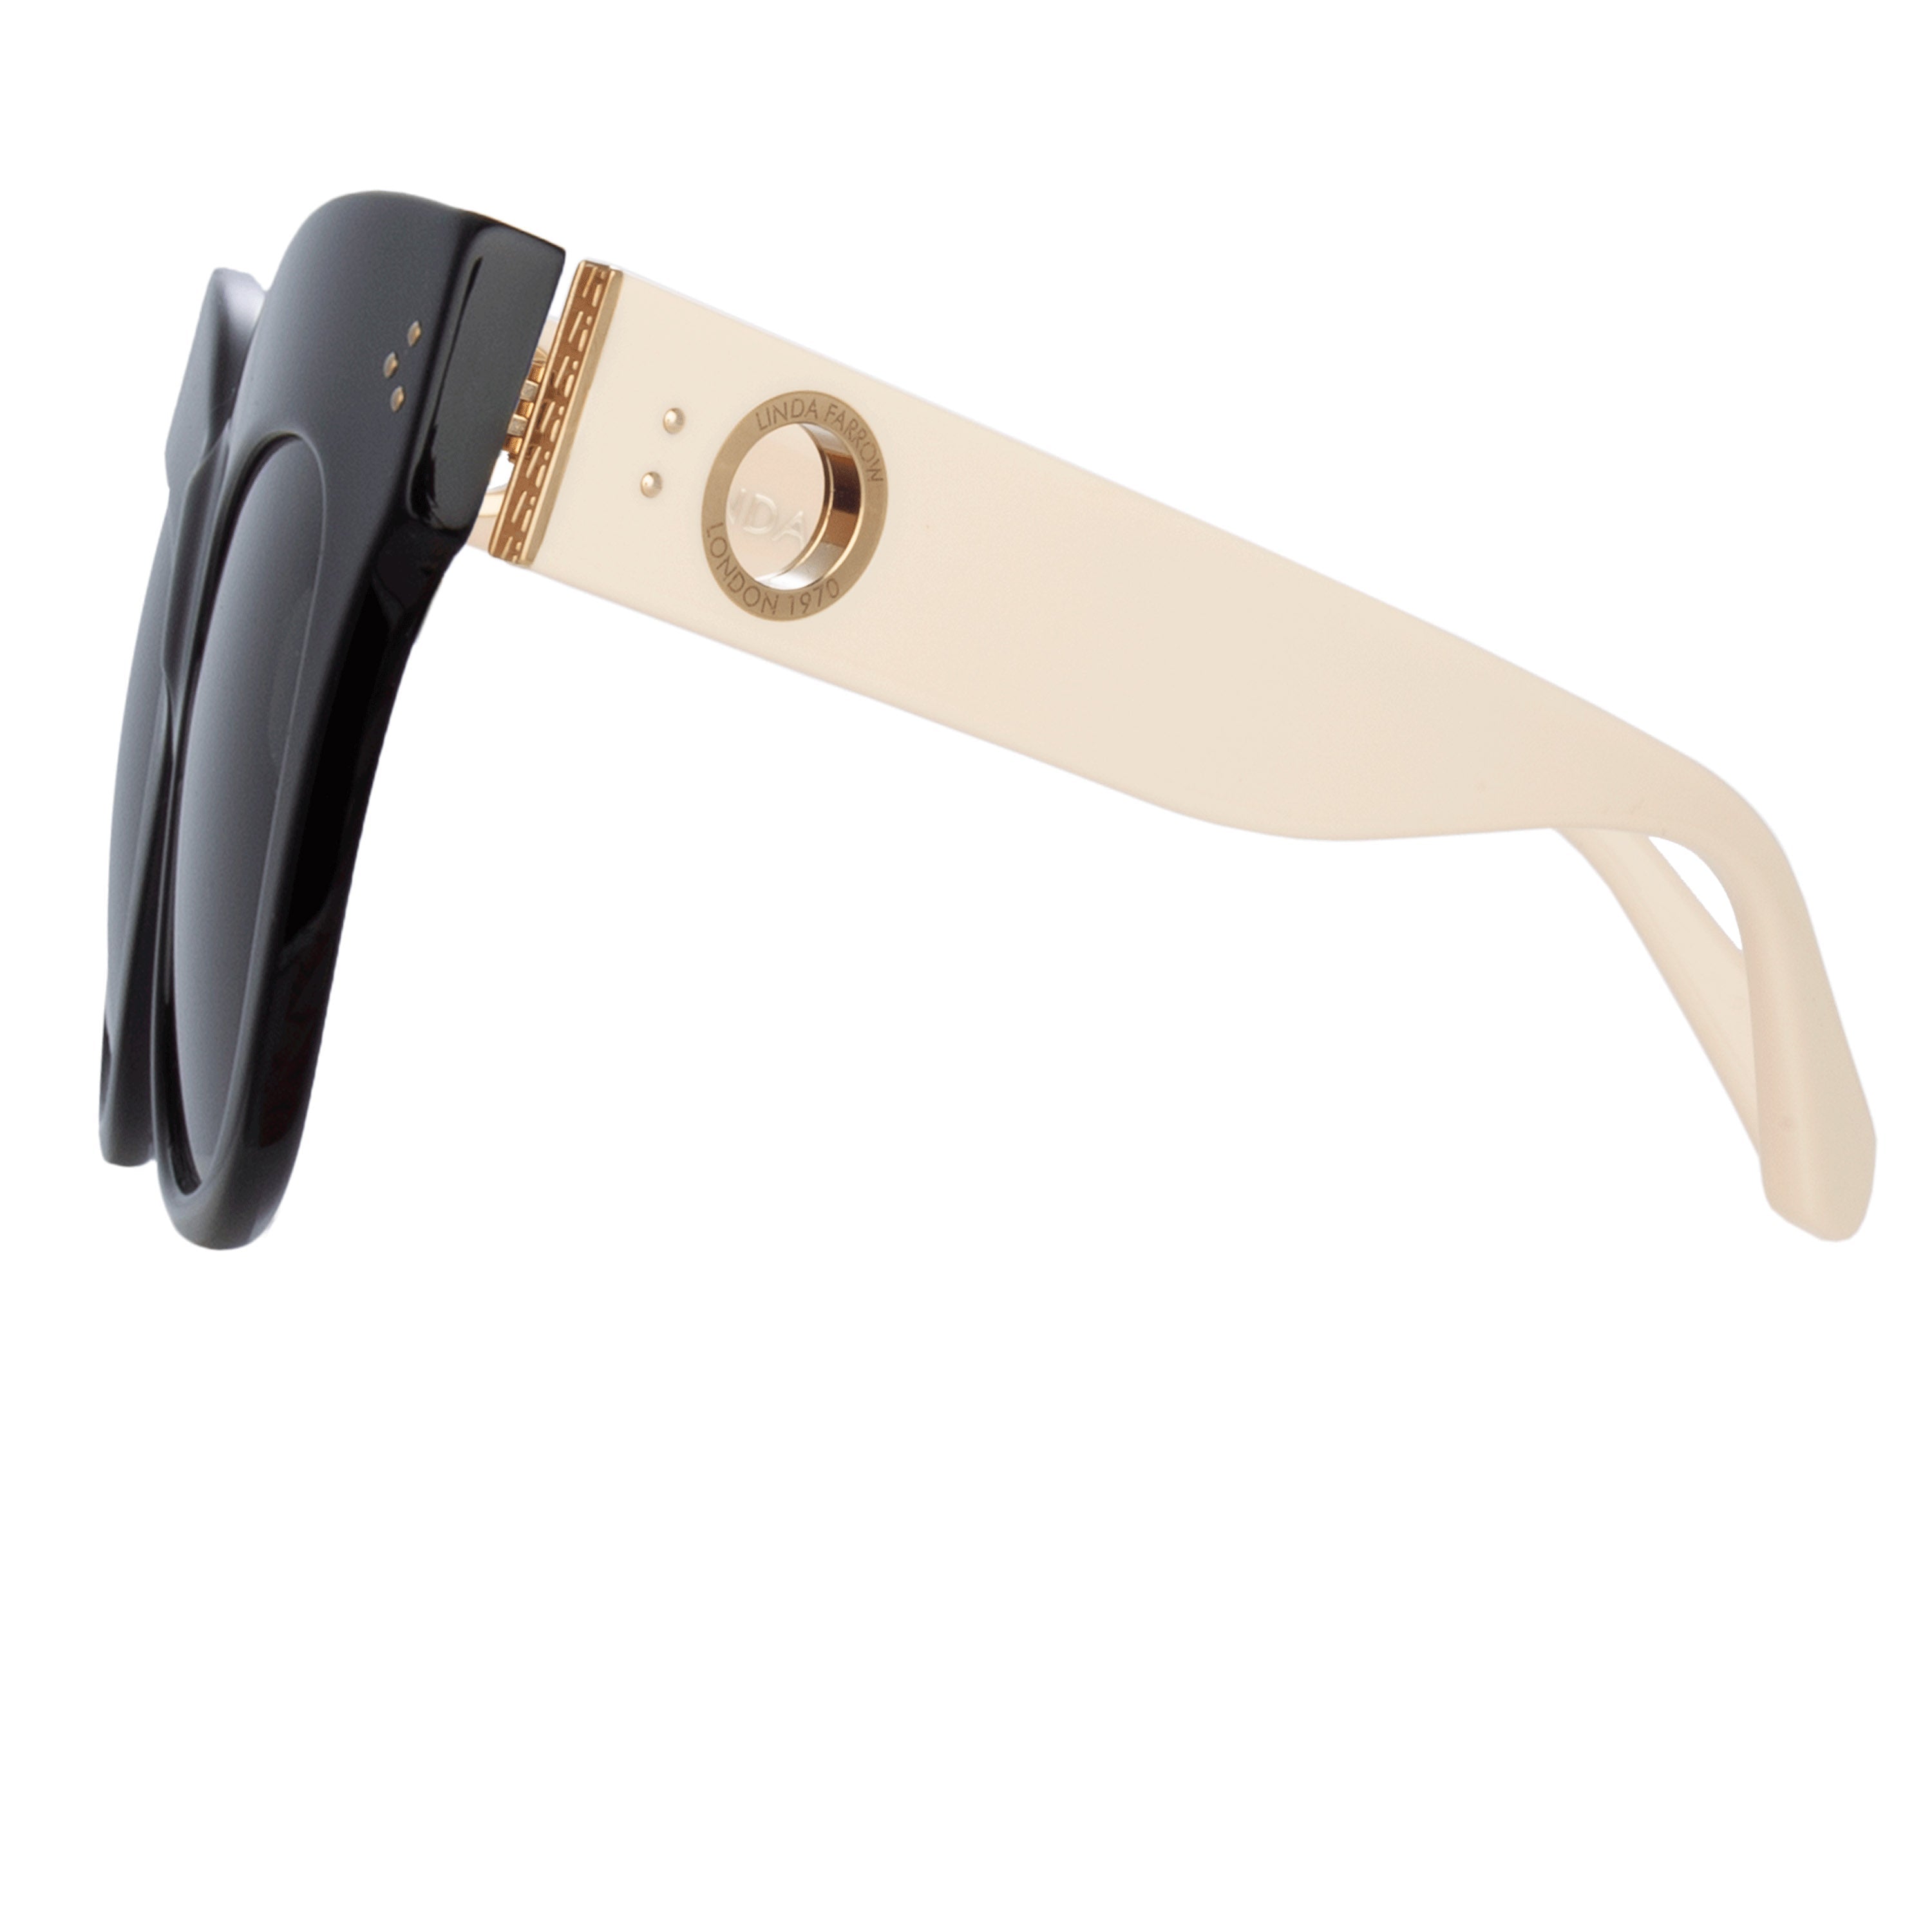 Color_LFL1049C8SUN - Dunaway Oversized Sunglasses in Black and Cream